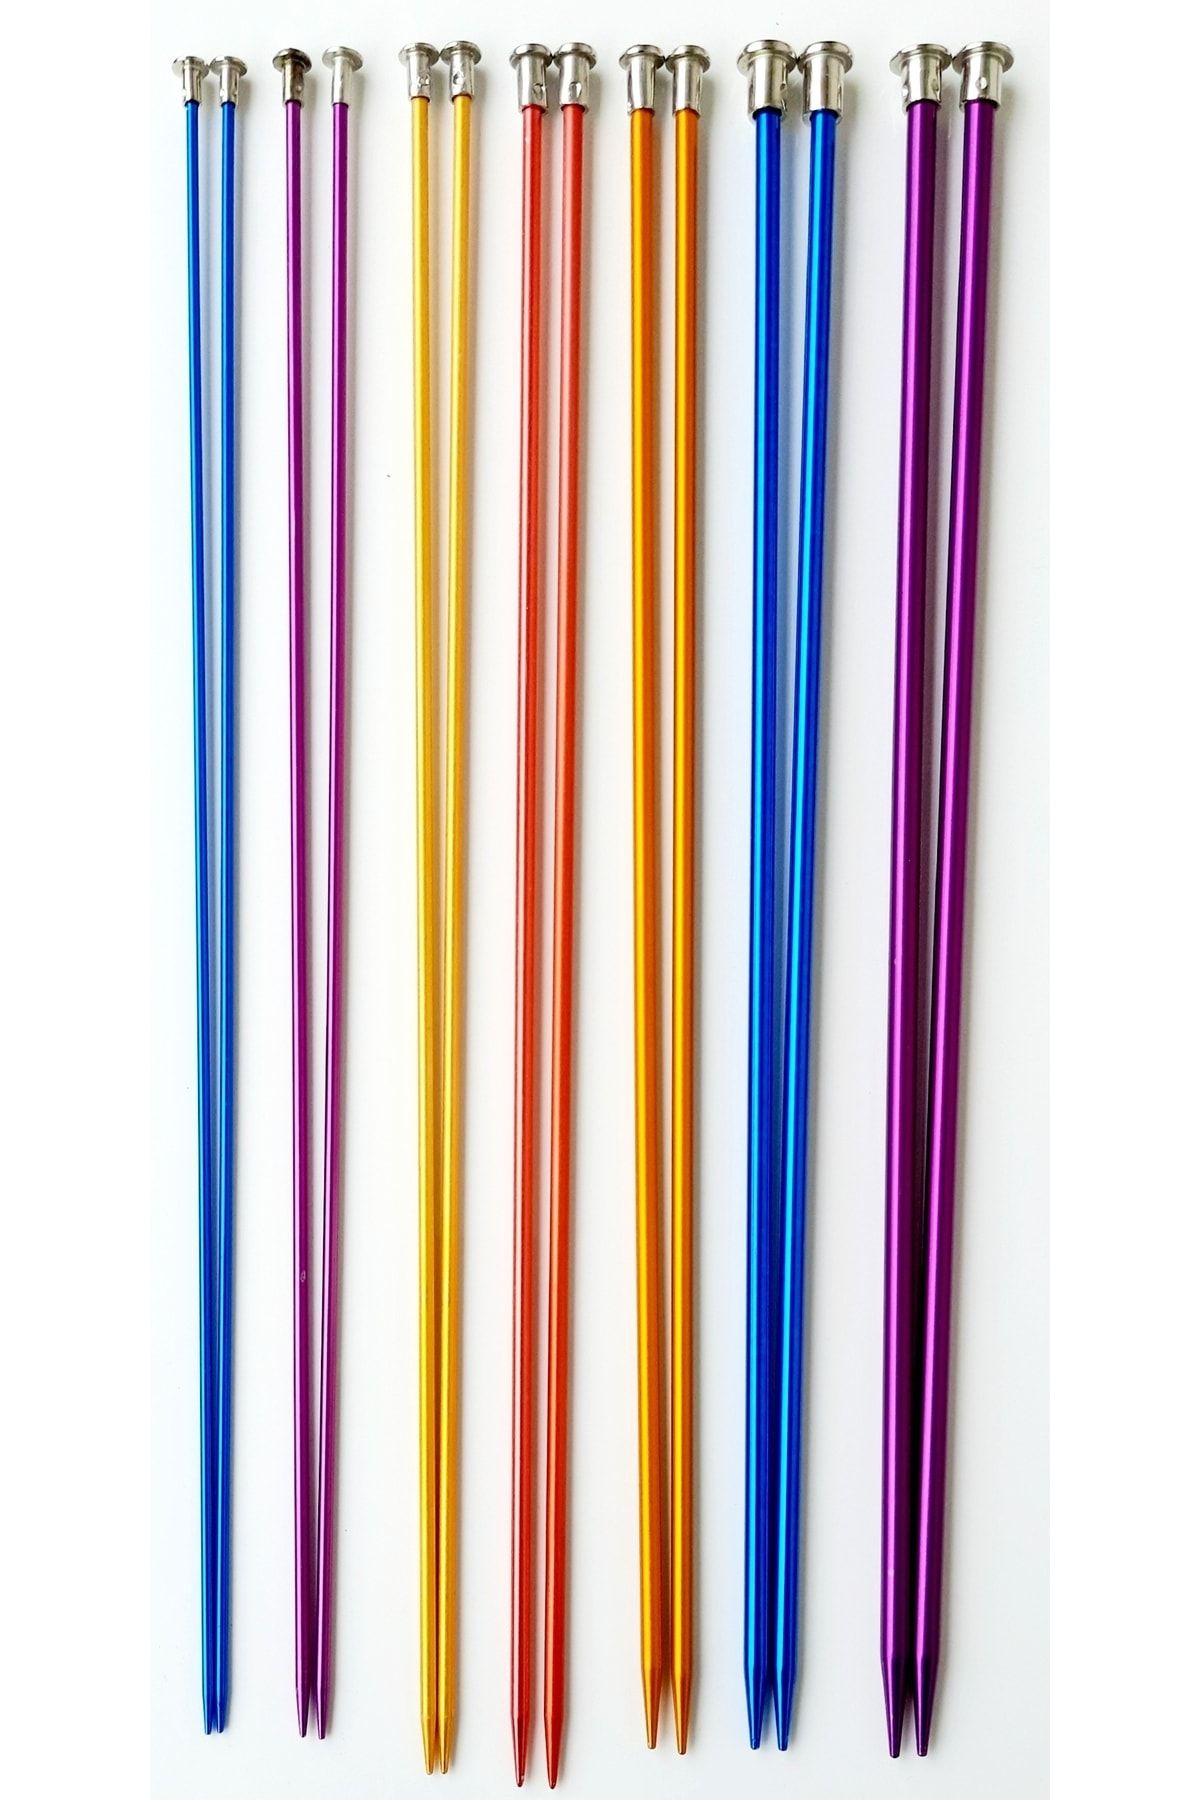 Kezban Tekstil Renkli Örgü Şiş Seti Titanyum ( 2,5-3-3,5-4-4,5-5-6 )no 7 Adet Rnkşiş35